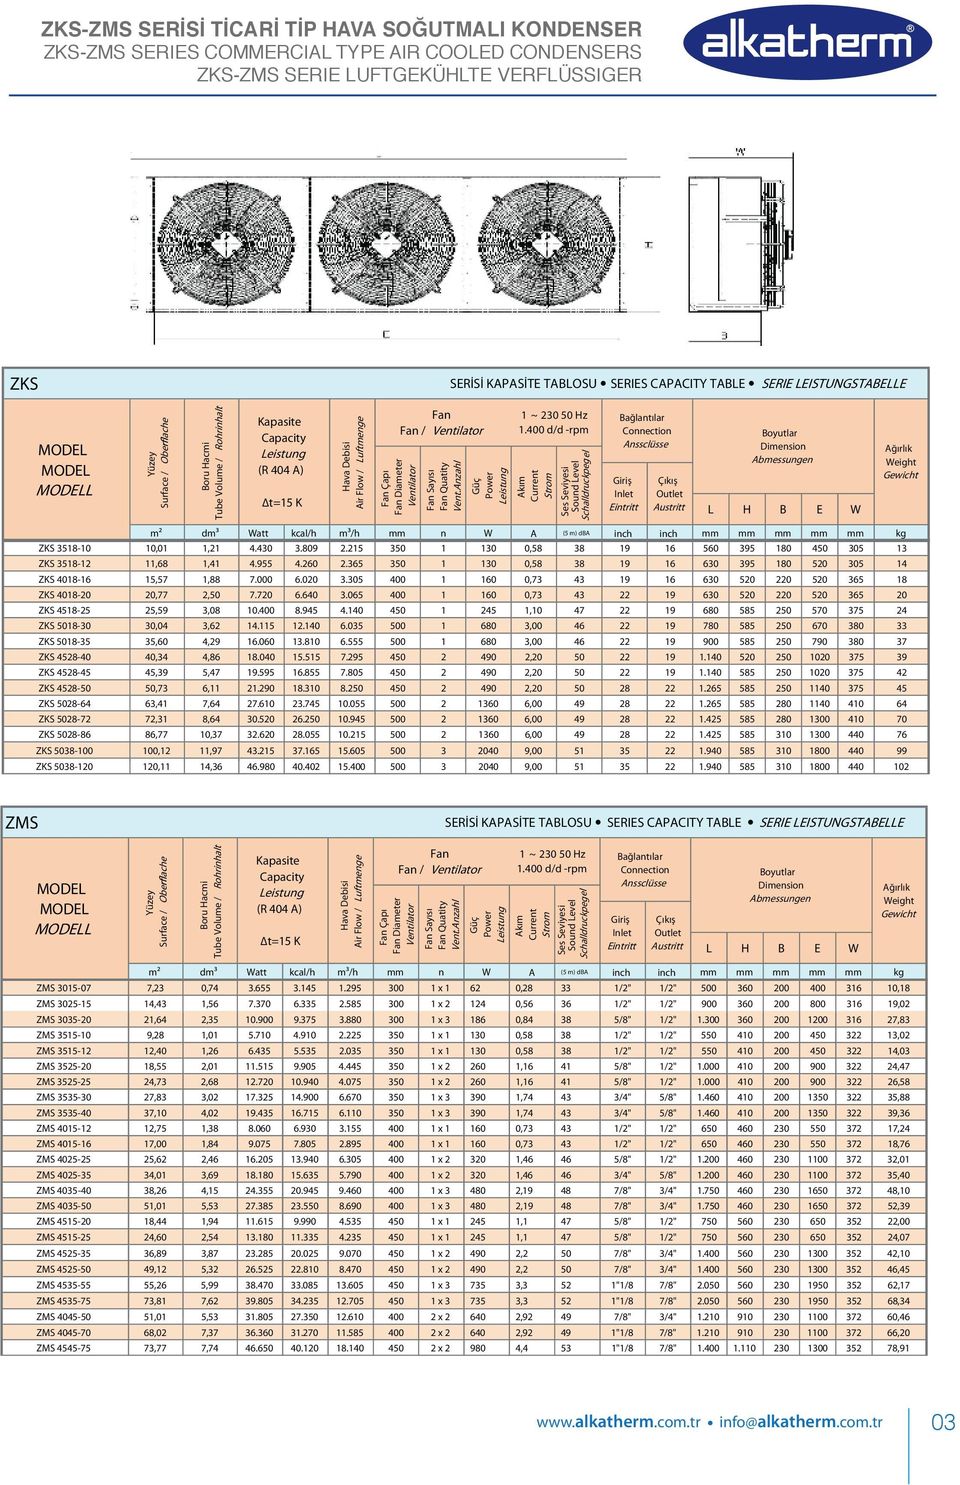 400 d/d -rpm Akım Current Strom Ses Seviyesi Sound Level Schalldruckpegel Bağlantılar Connection Anssclüsse Giriş Inlet Eintritt Çıkış Outlet Austritt L H Boyutlar Dimension Abmessungen B E W Ağırlık